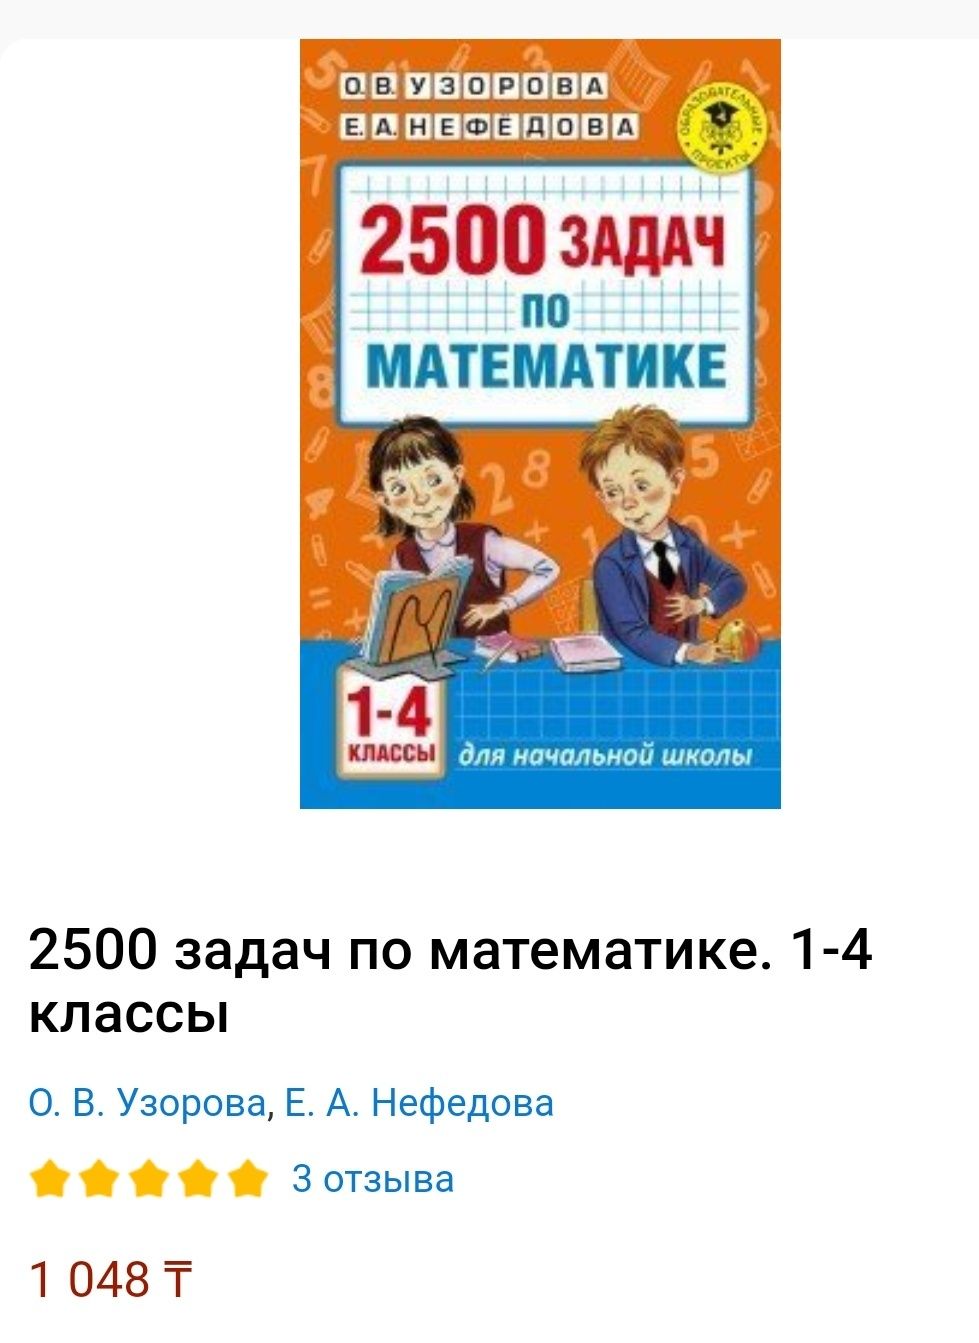 2500 задач по математике. 1-4 классы
О. В. Узорова, Е. А. Нефедова